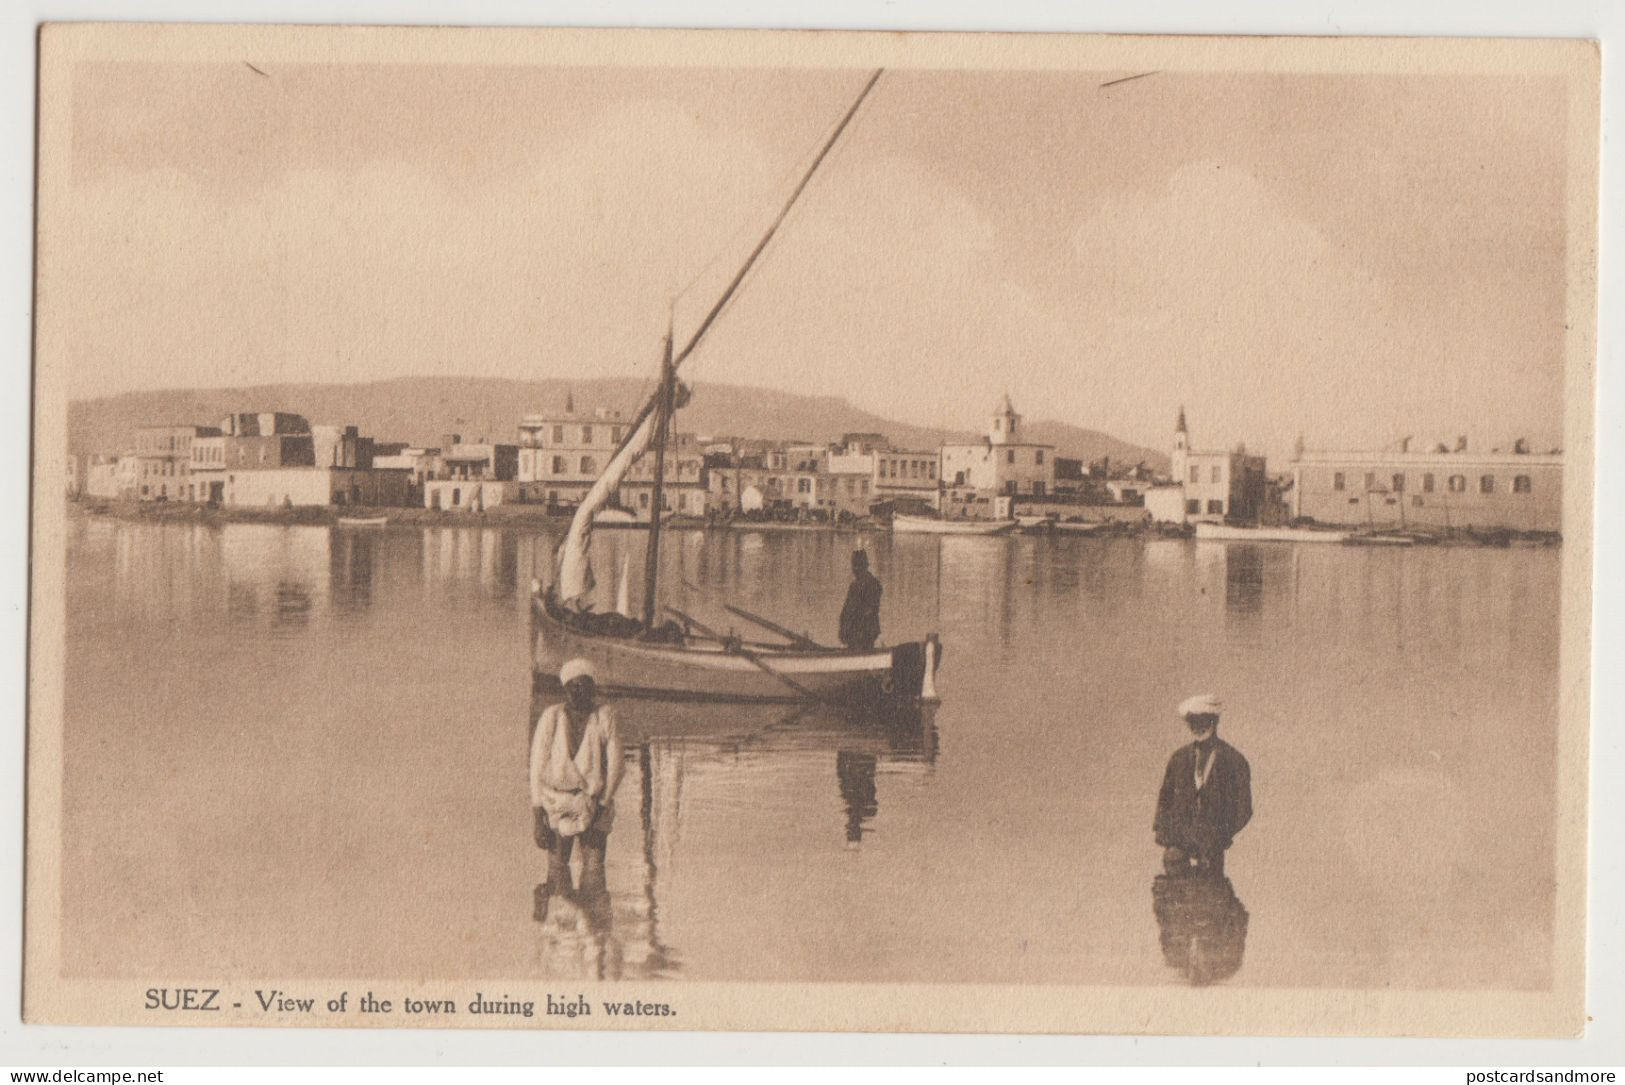 Egypt Port Said & Suez Canal Lot of 8 unused postcards ca. 1920 Siylianos Coutsicos - Isaac Behar